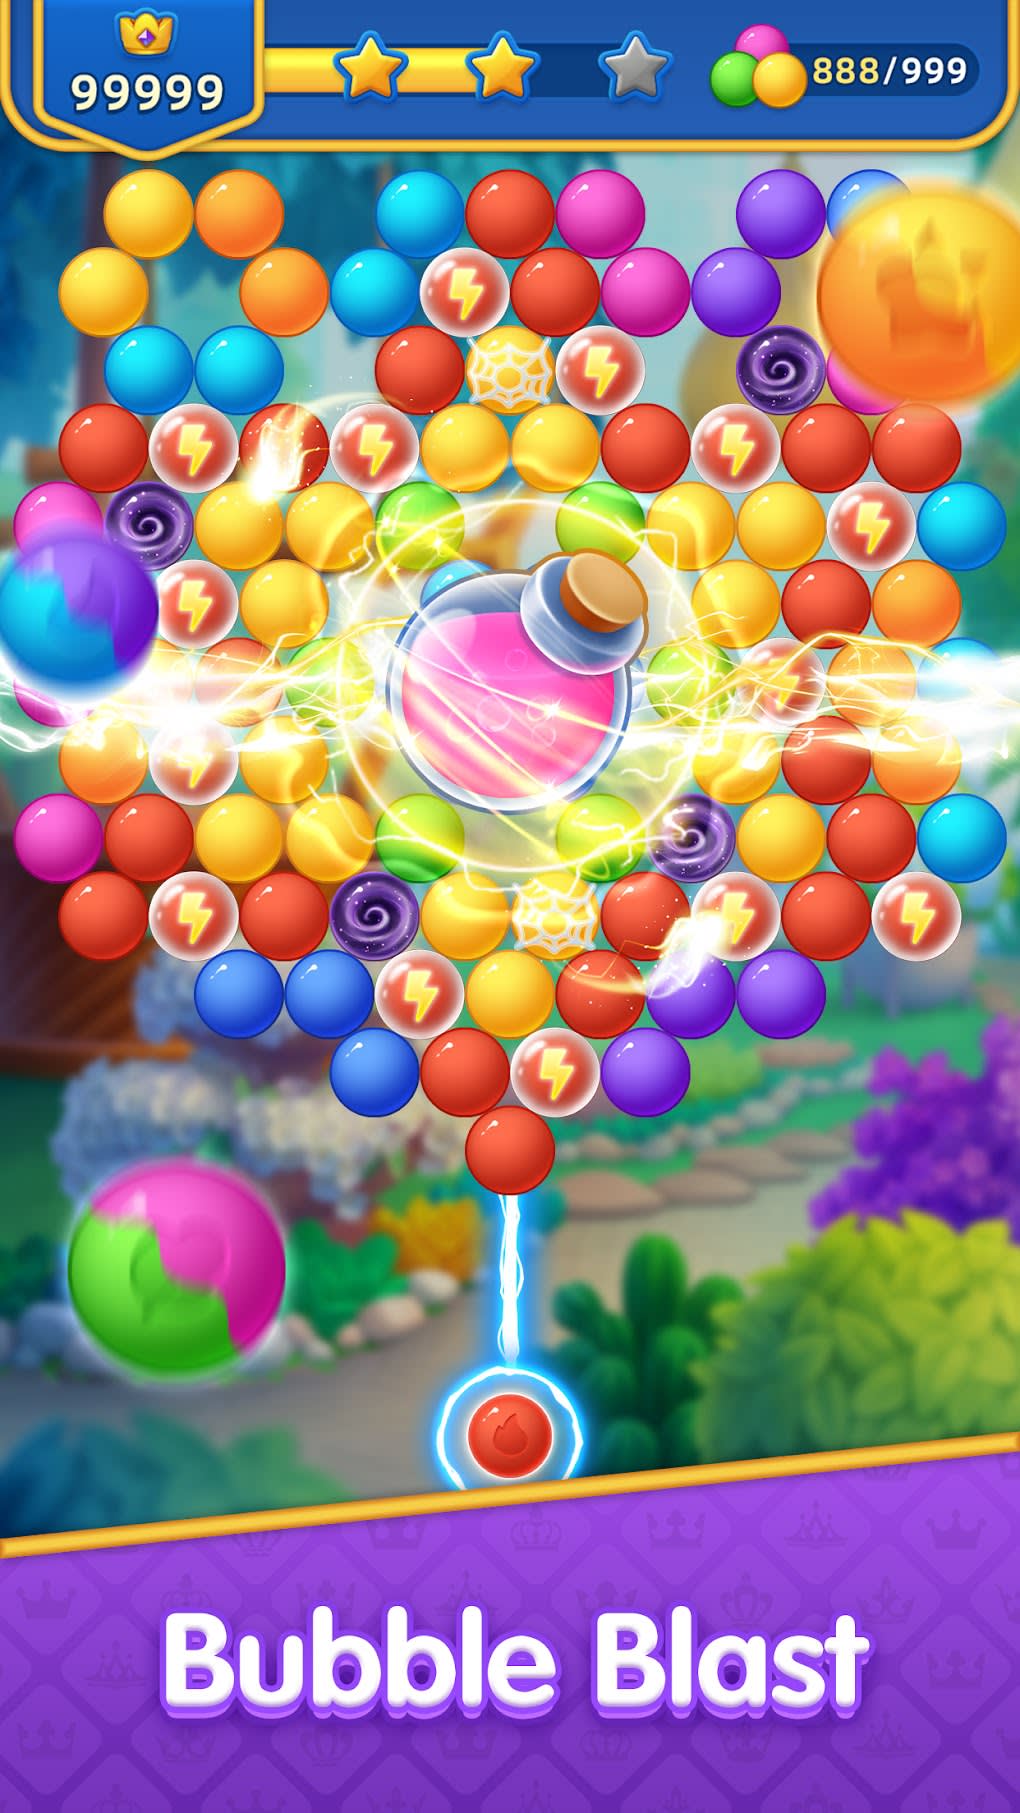 Melhores jogos Bubble Shooter para Android